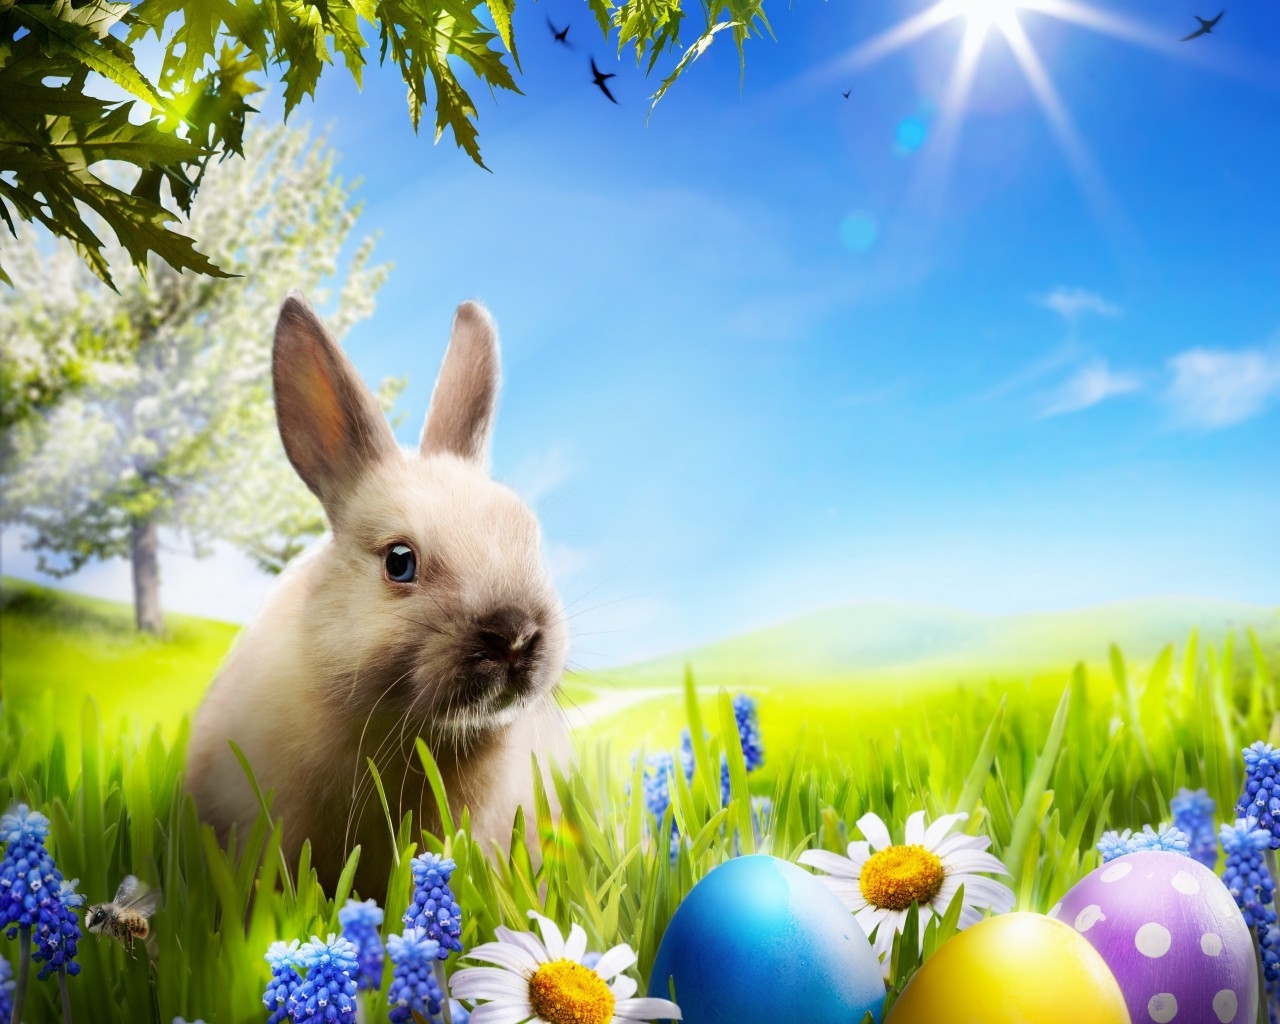 Little Rabbit for 1280 x 1024 resolution